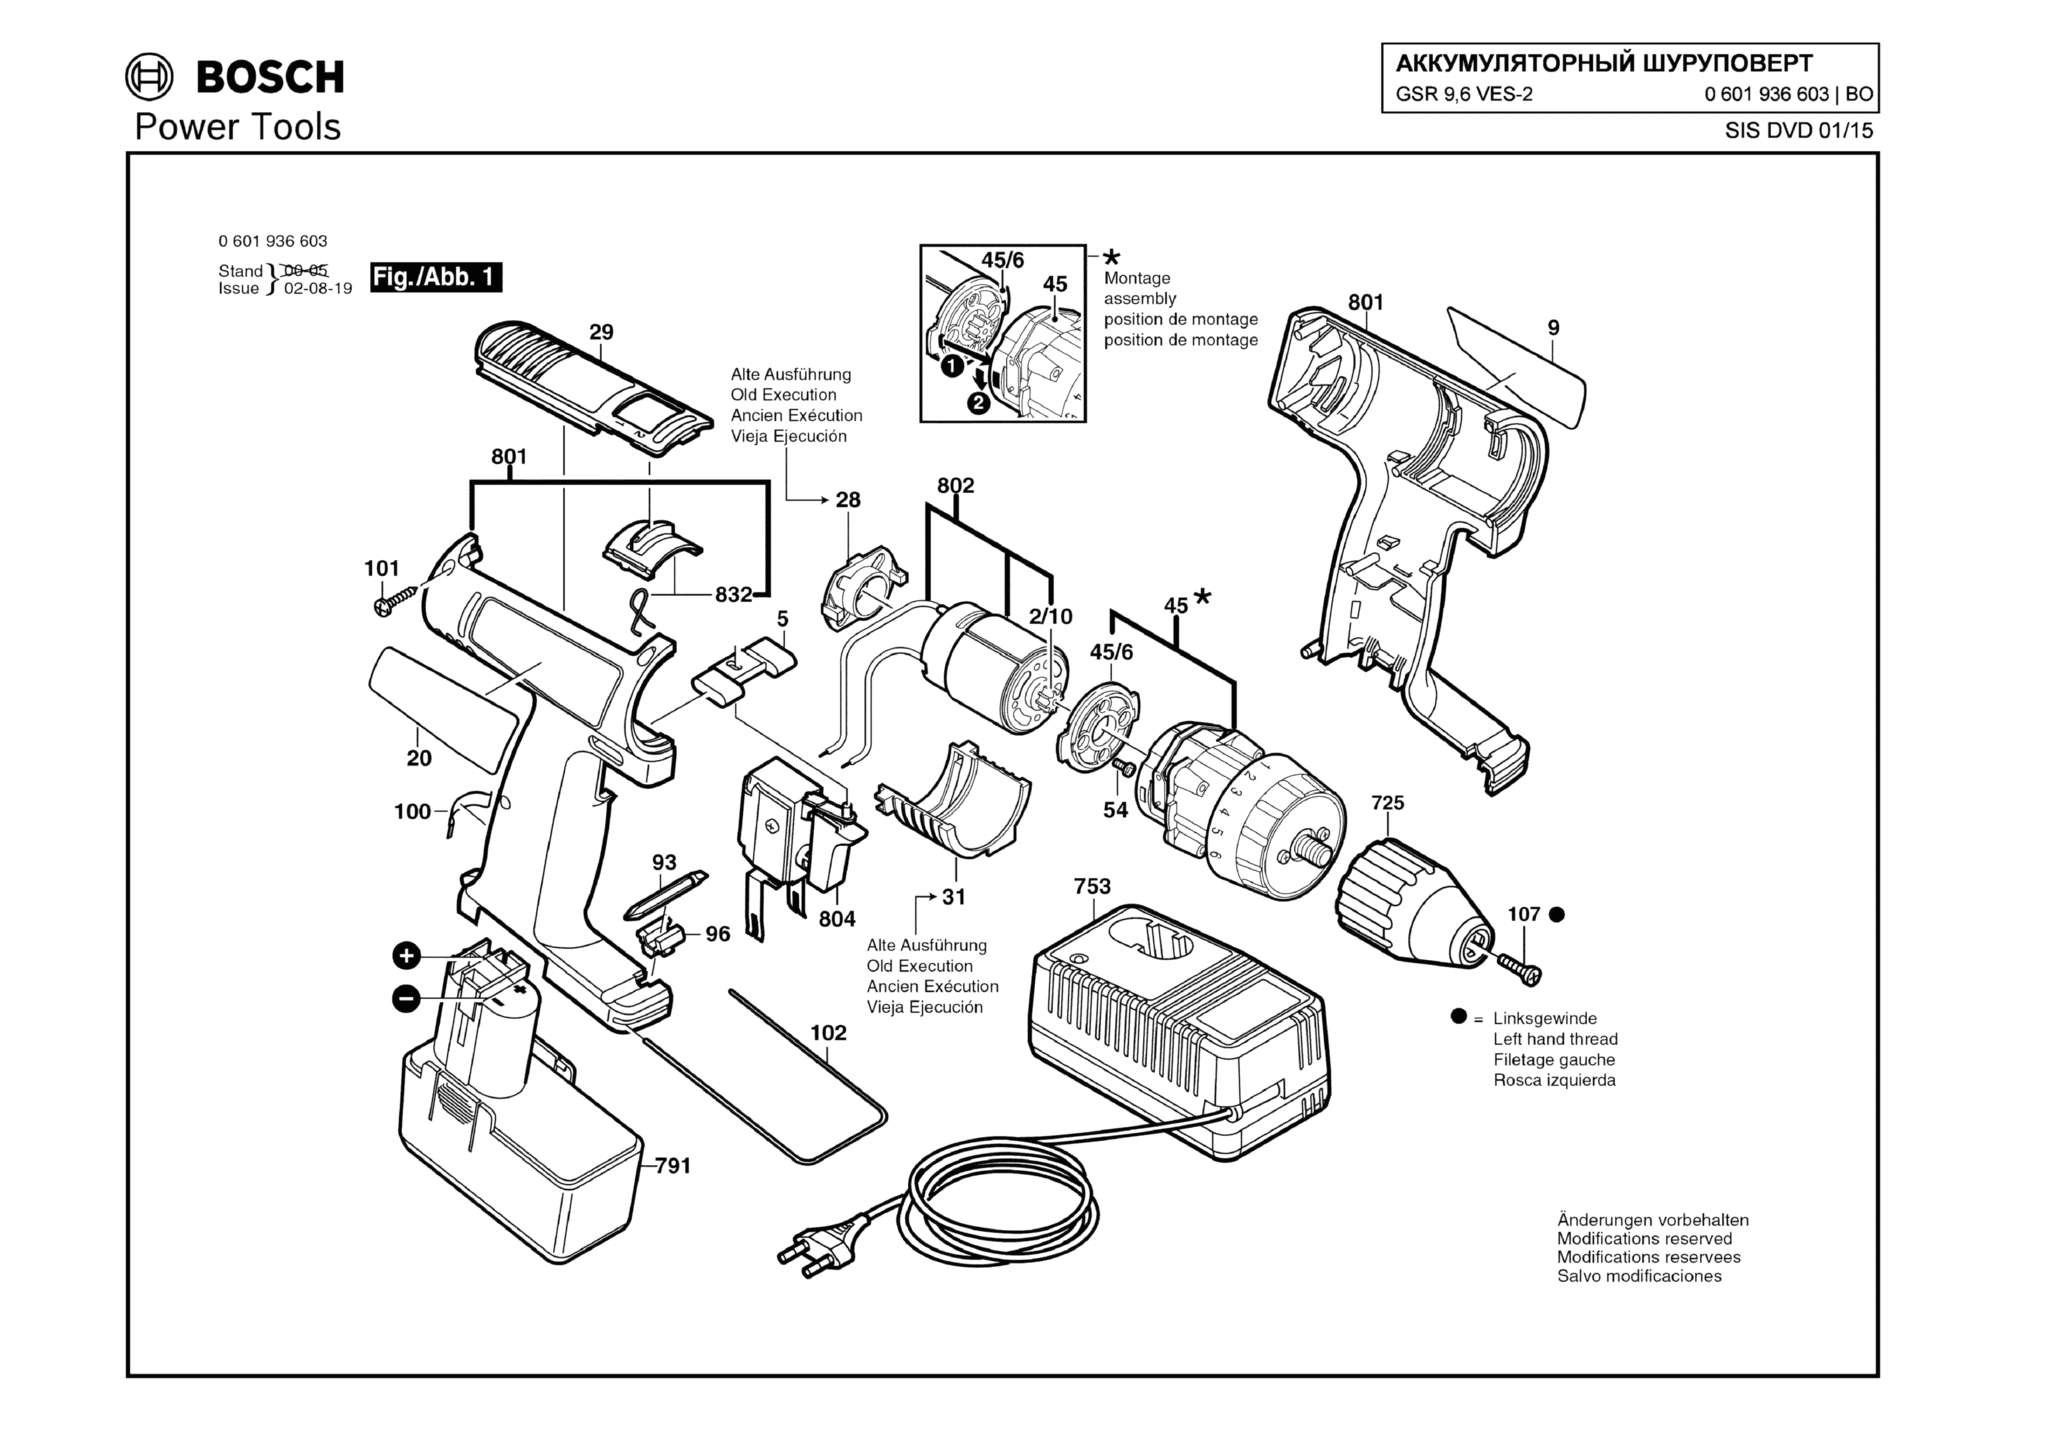 Запчасти, схема и деталировка Bosch GSR 9,6 VES-2 (ТИП 0601936603)